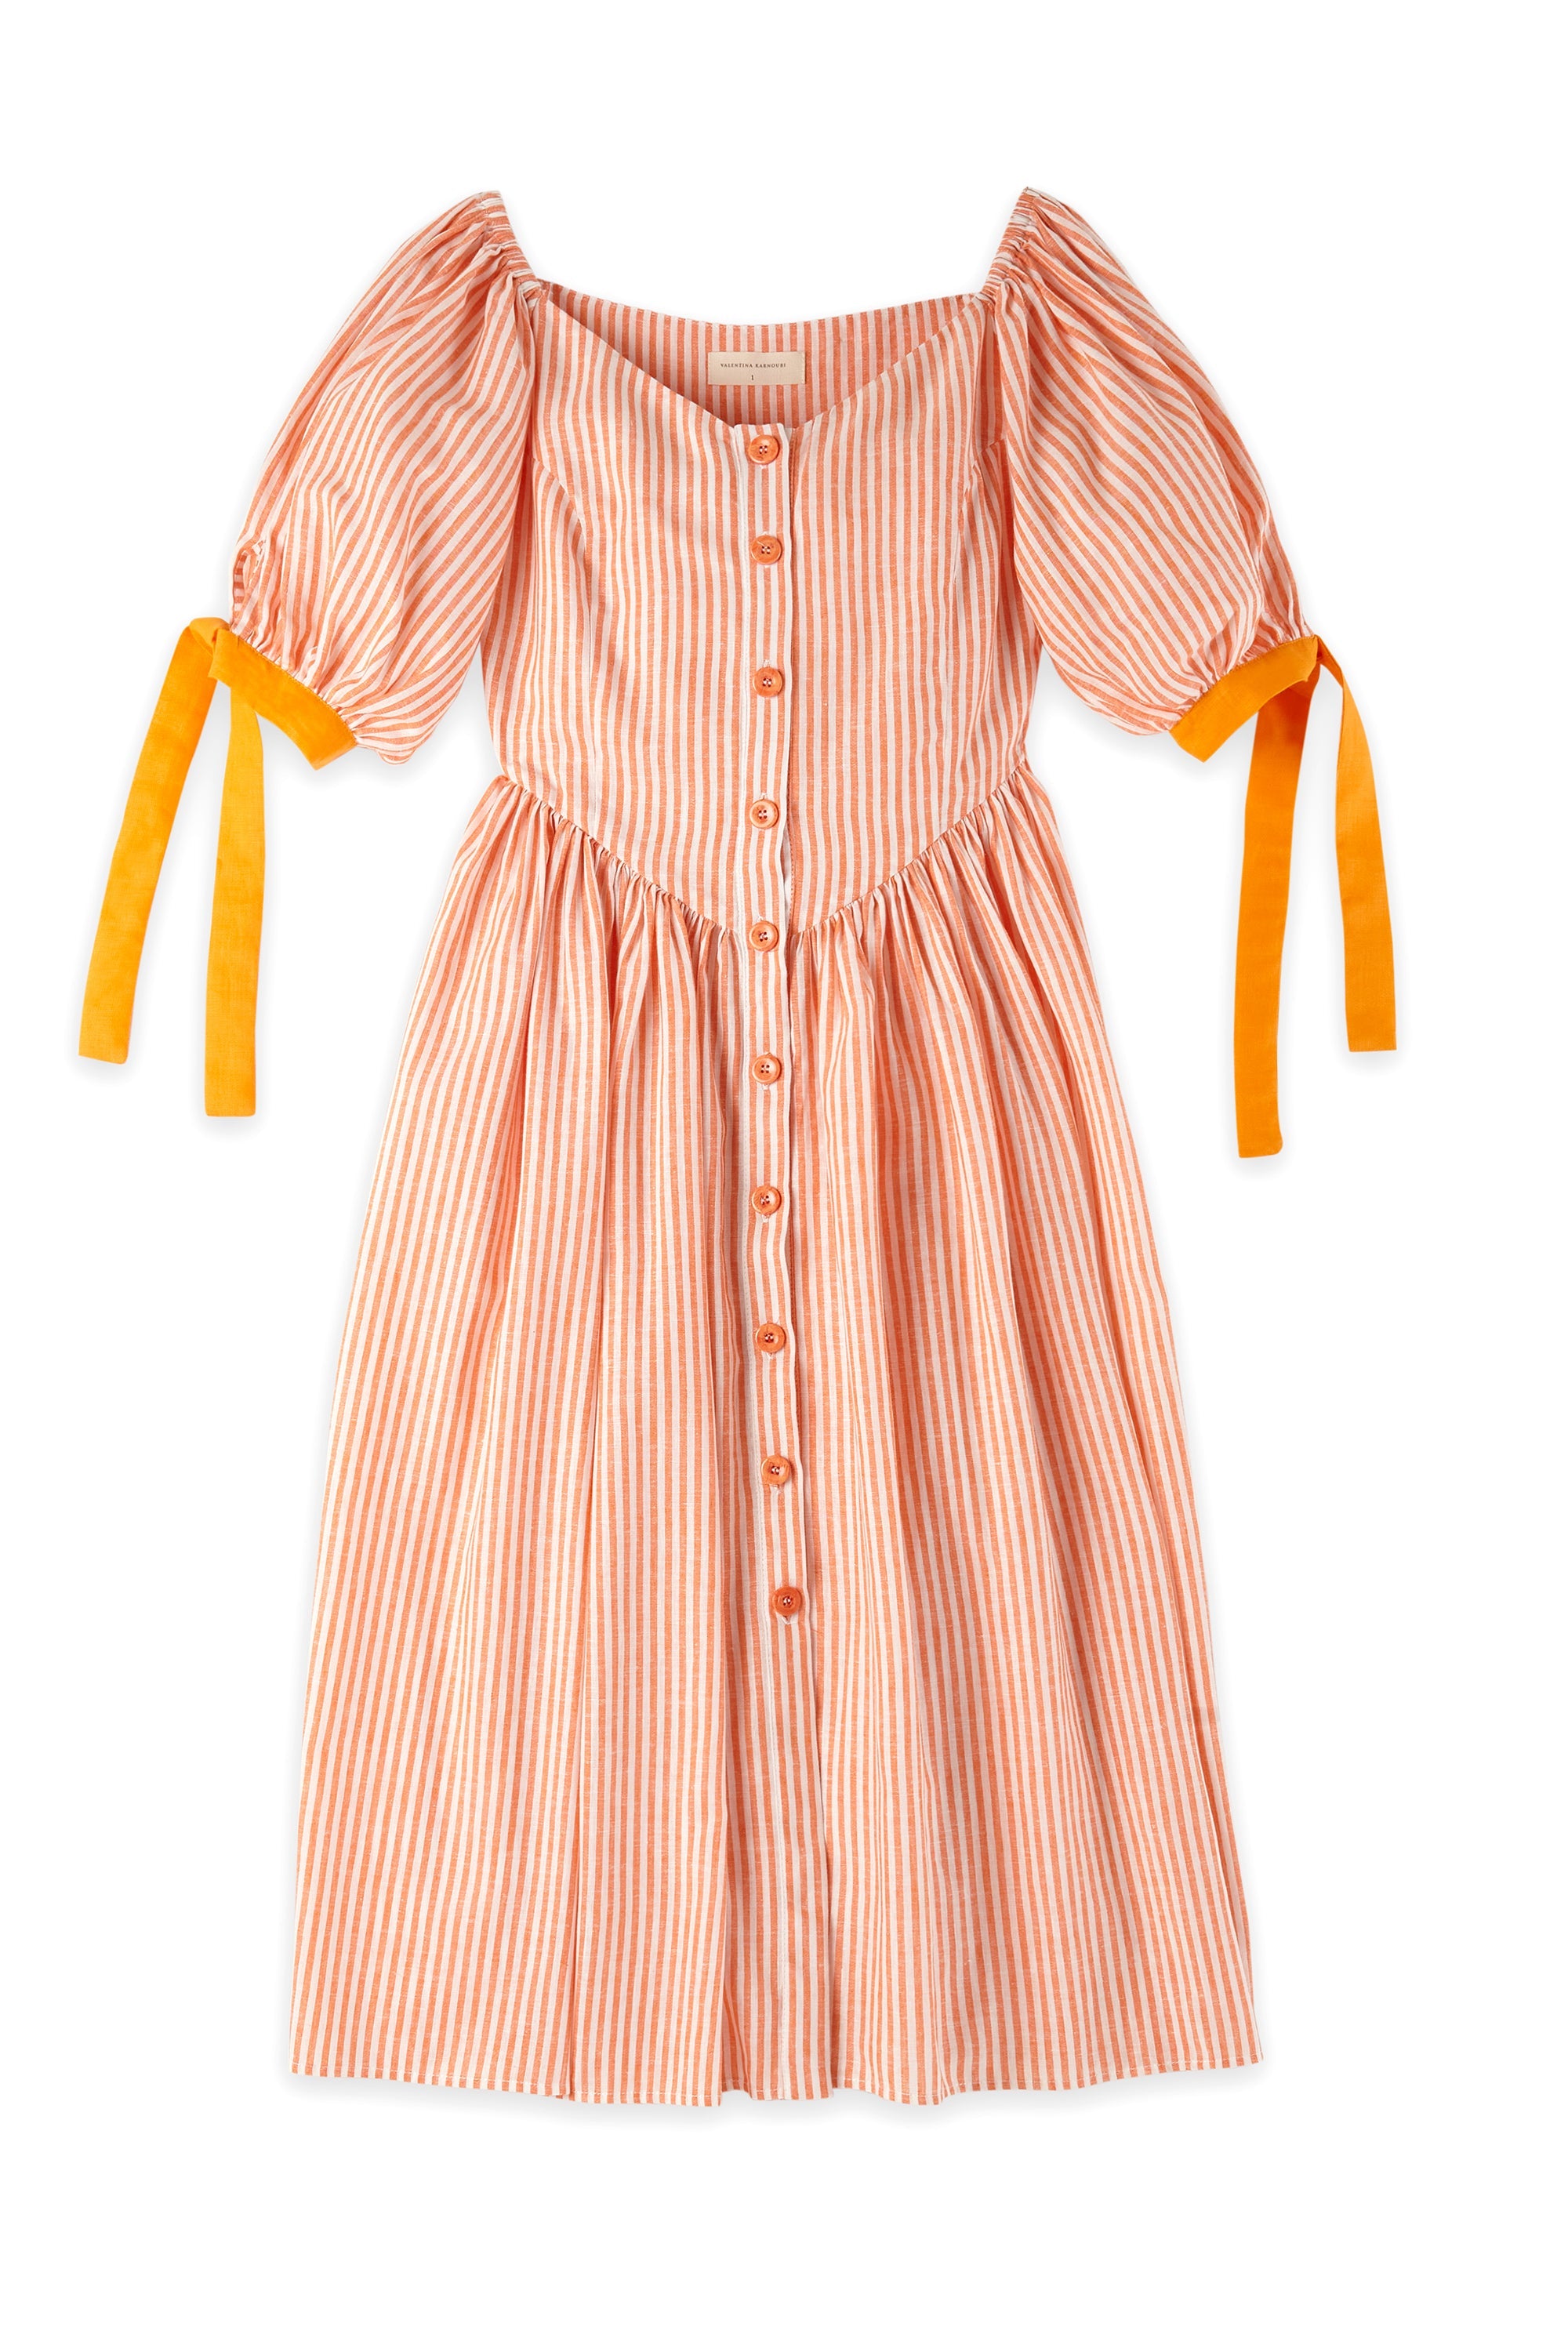 Caliope Dress orange